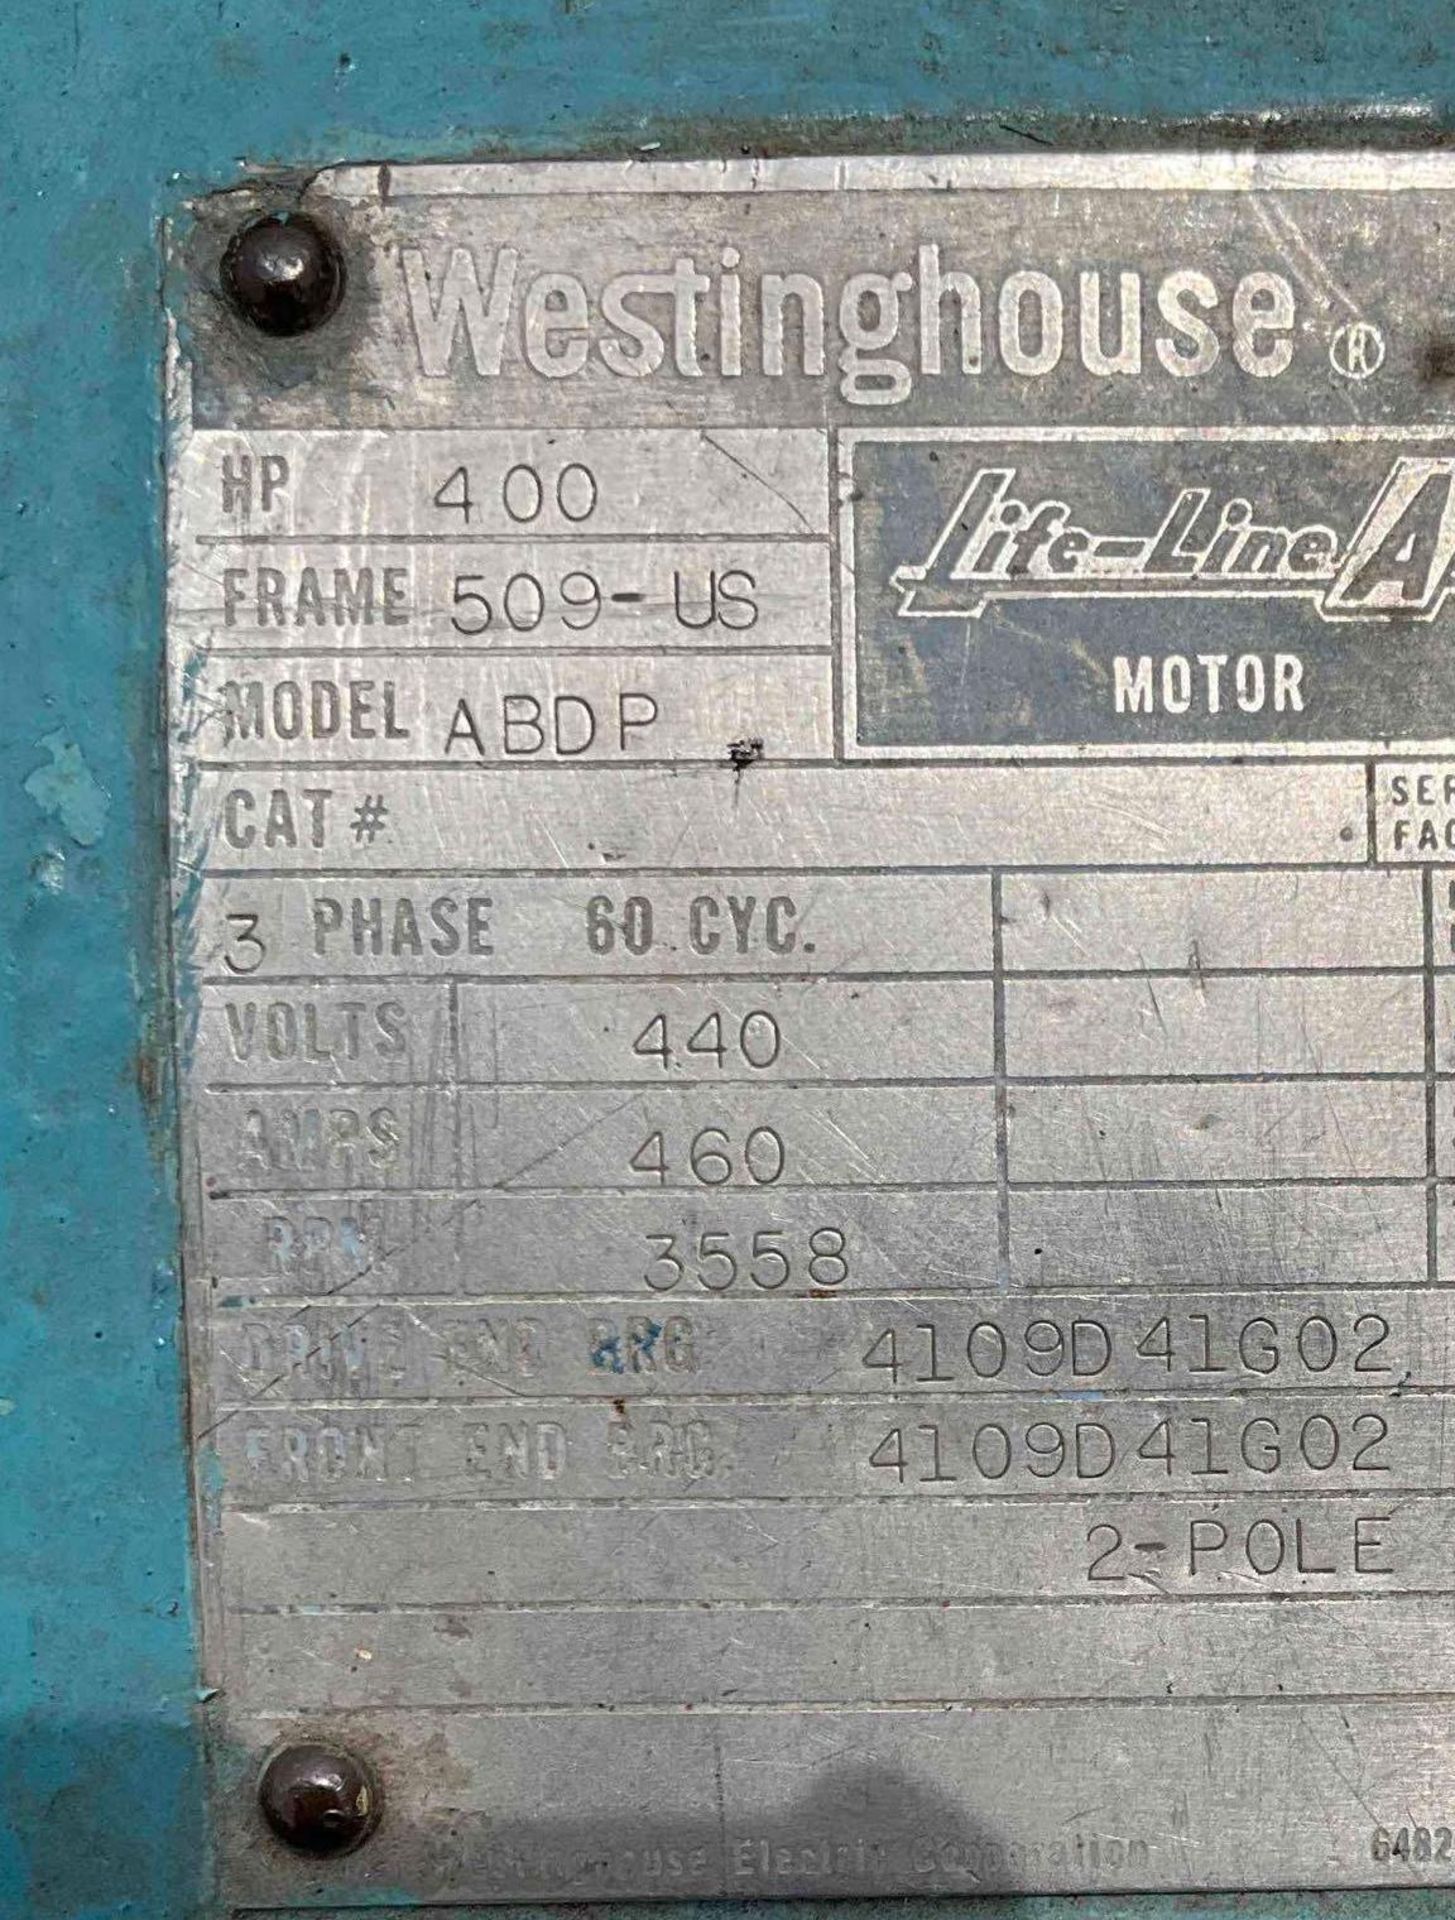 WESTINGHOUSE LIFE-LINE A MOTOR MODEL ABDP, 3 PH, 60 CYC, 440 V, 460 A, 3558 RPM, 400 - Image 6 of 9